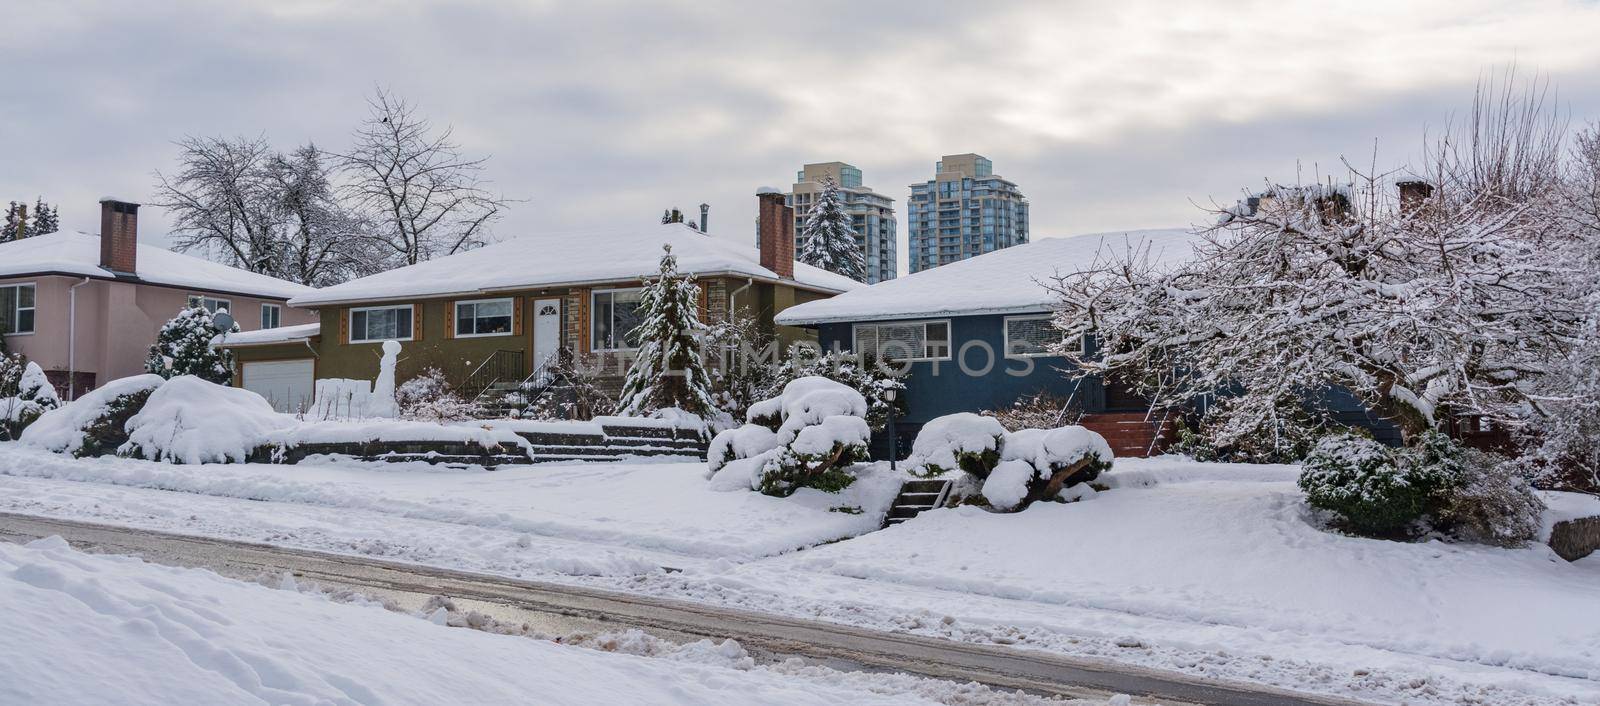 Street of residential houses in suburban. Family houses in snow on winter season by Imagenet